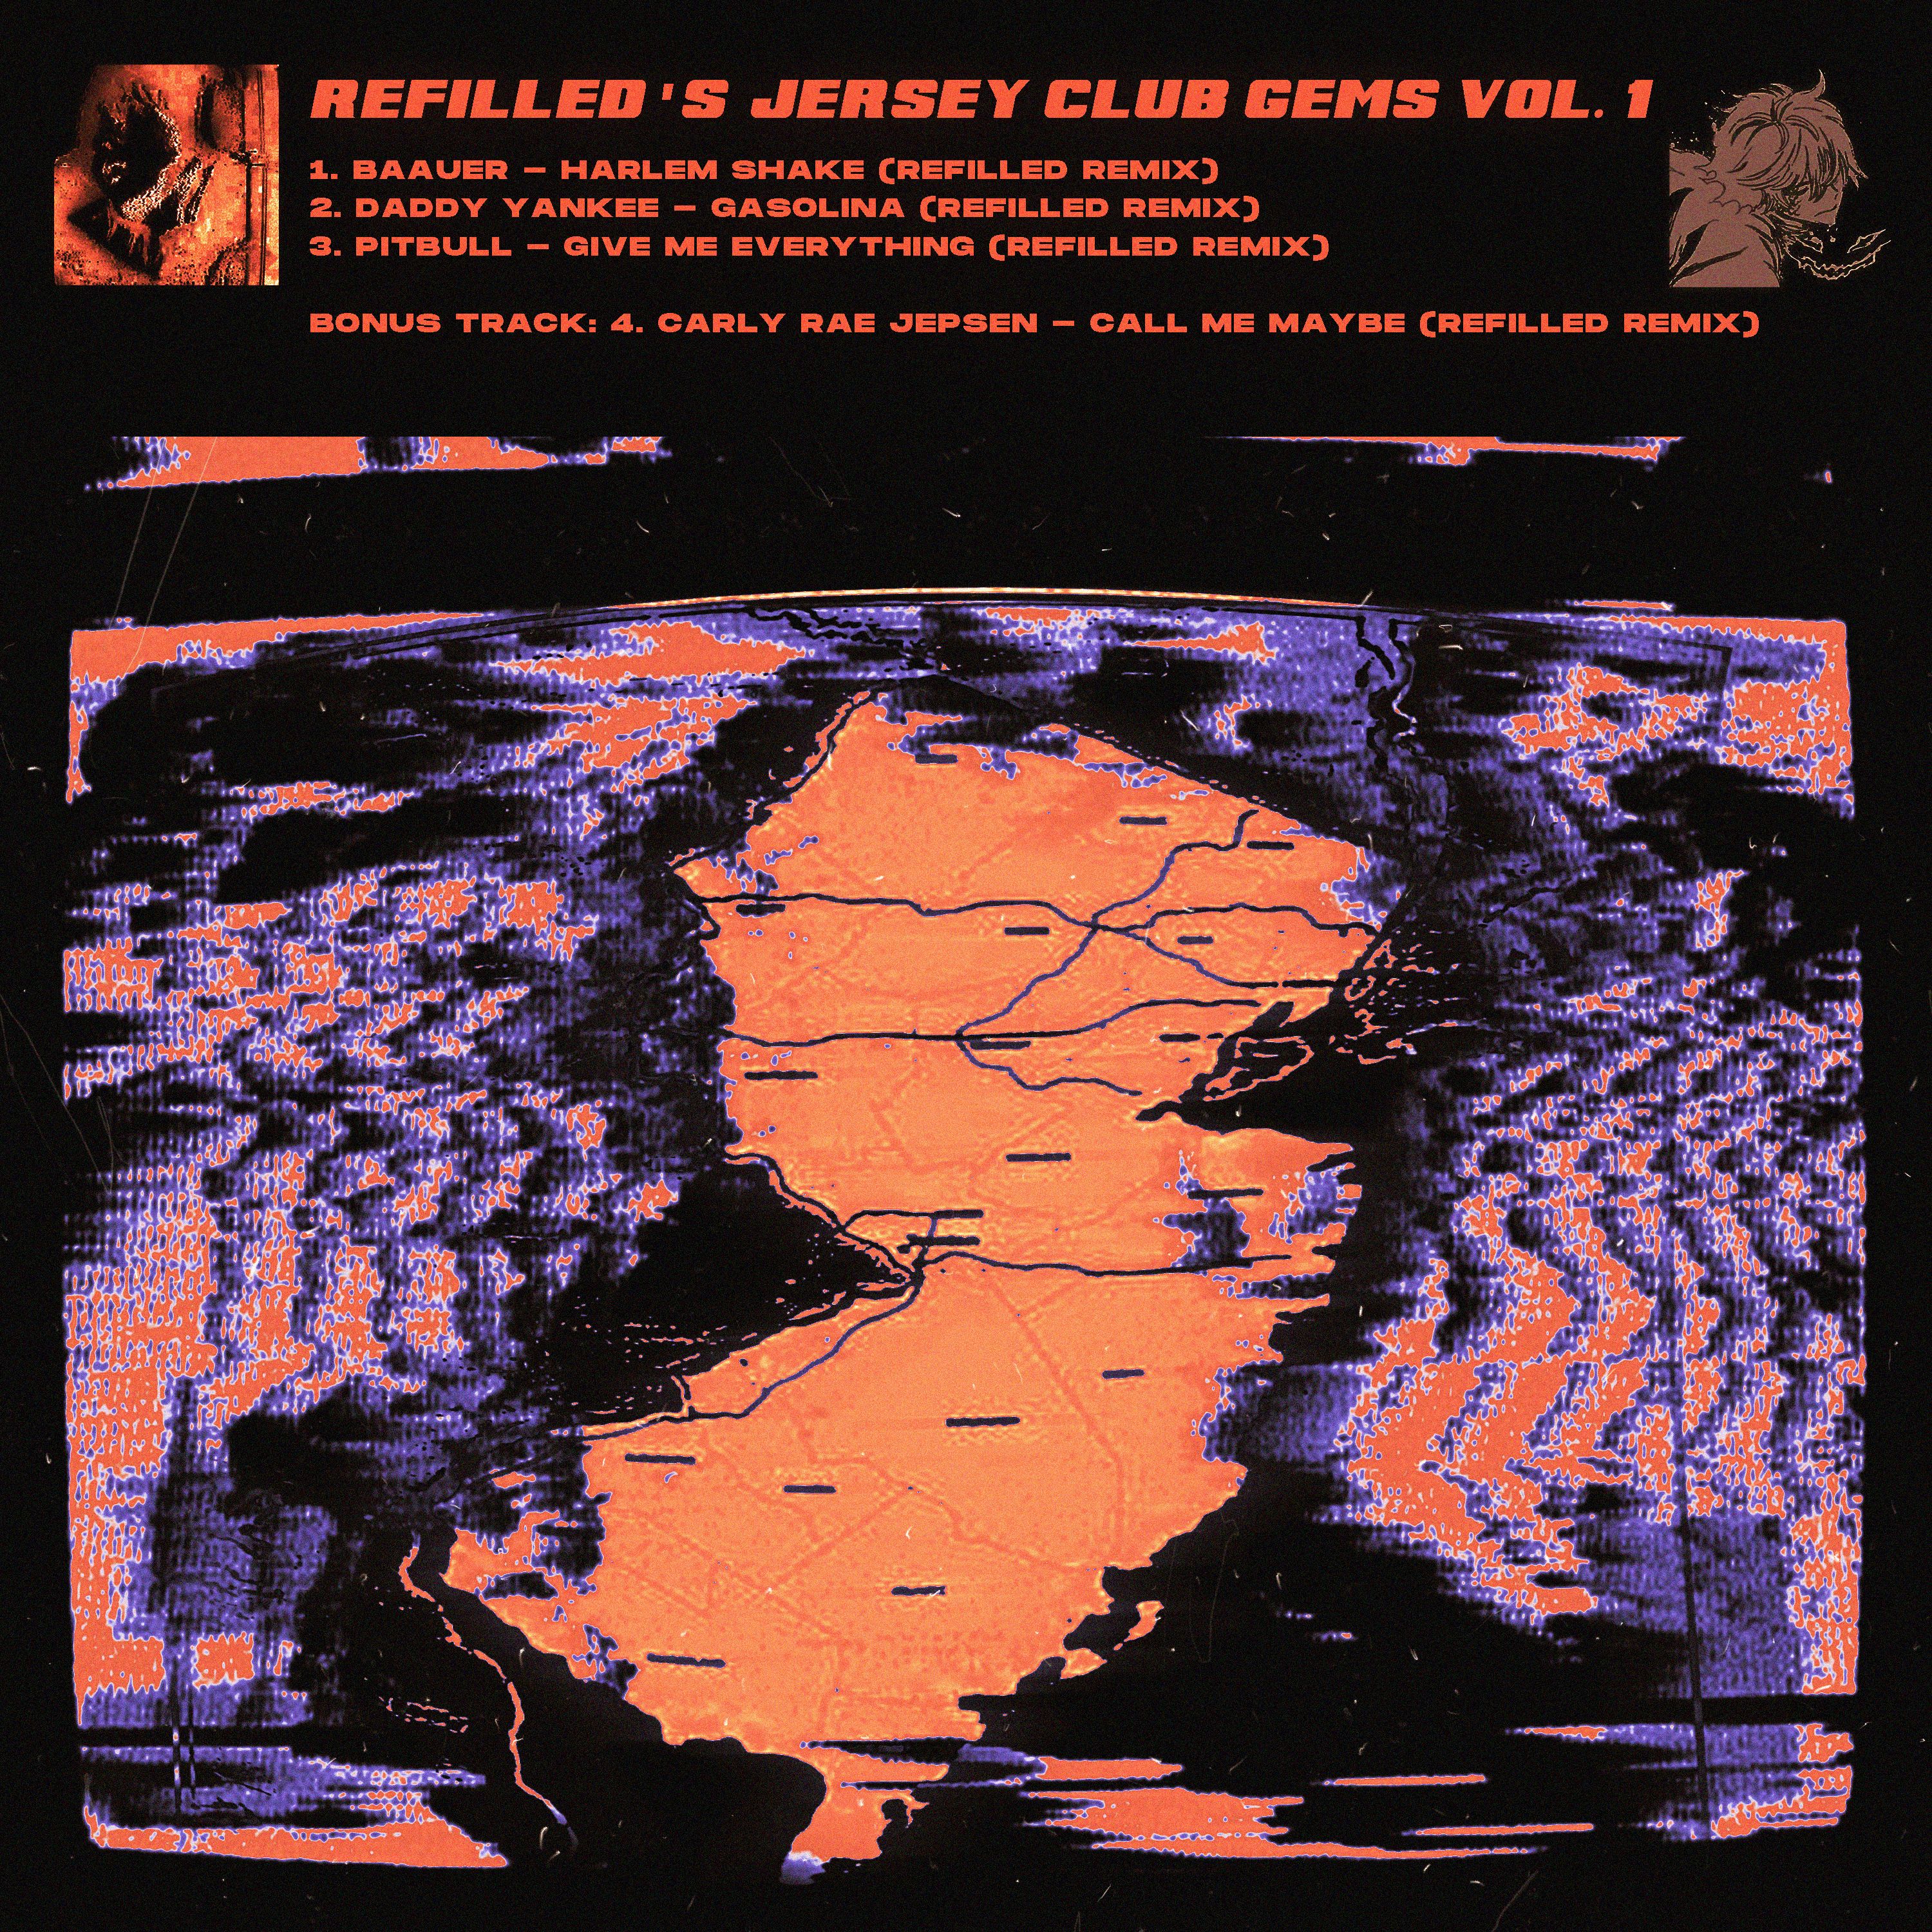 Daddy Yankee – Gasolina (Refilled Remix)